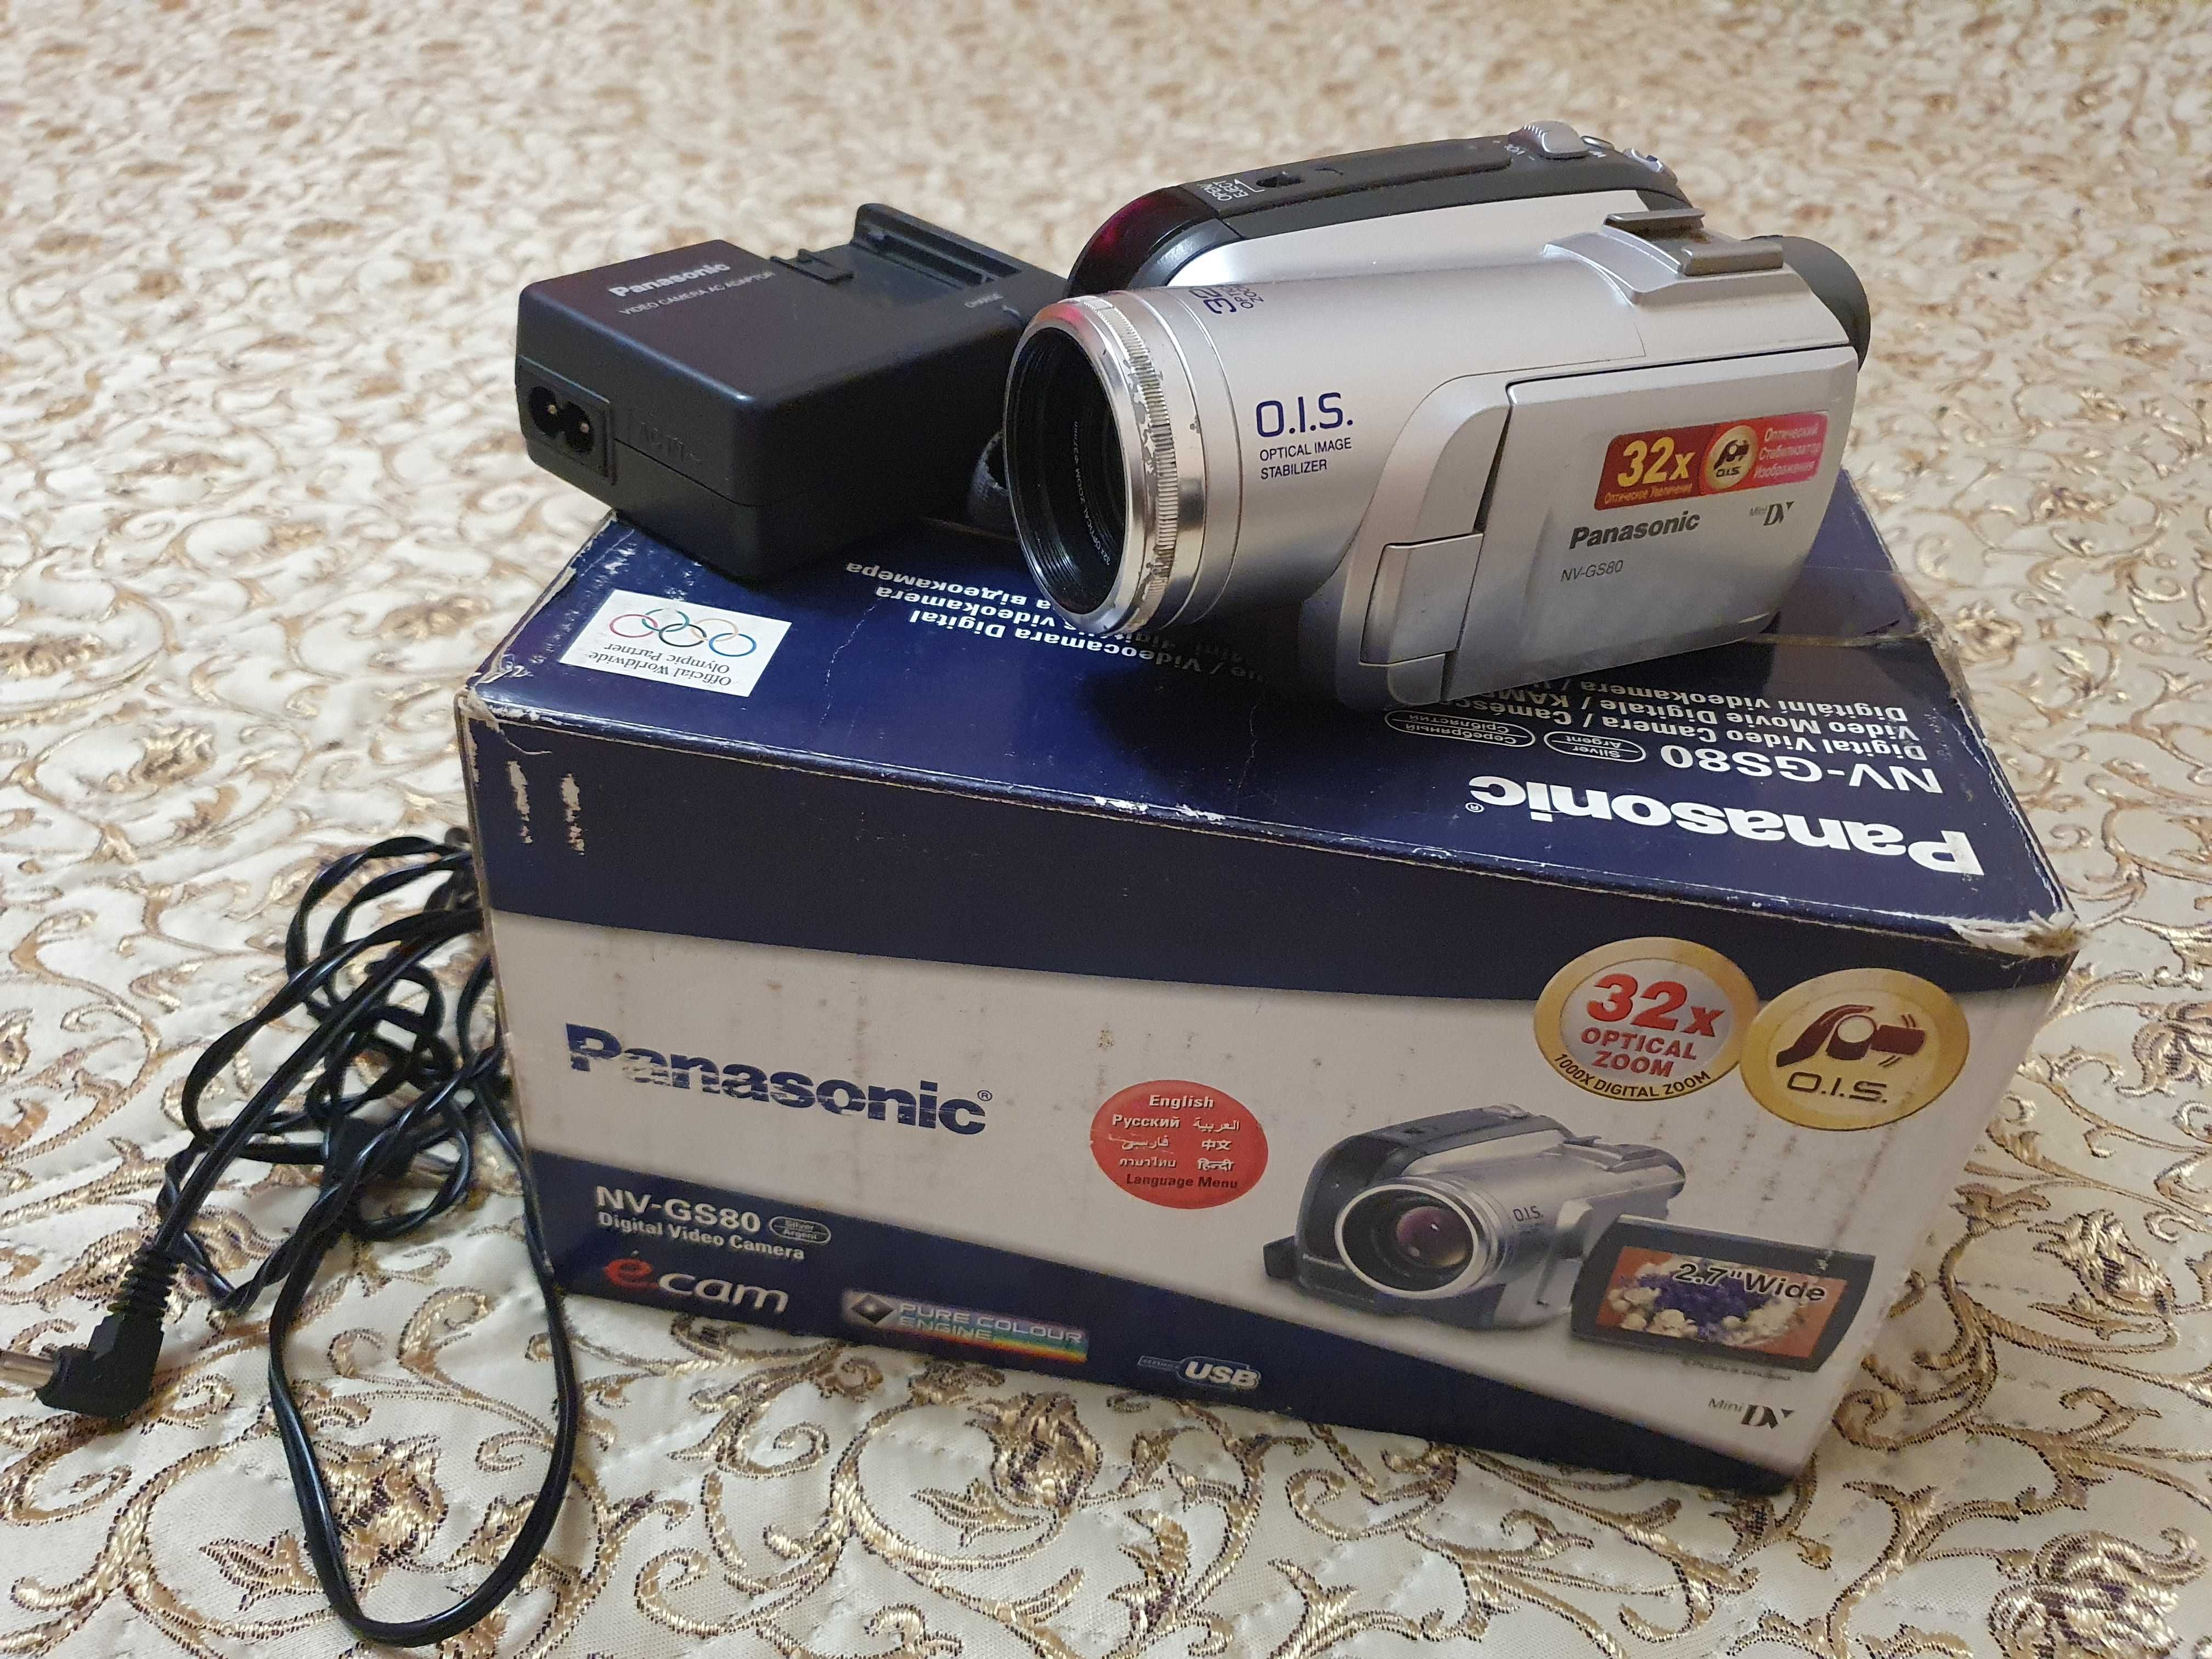 Видеокамера Panasonic NV-GS80EE-S